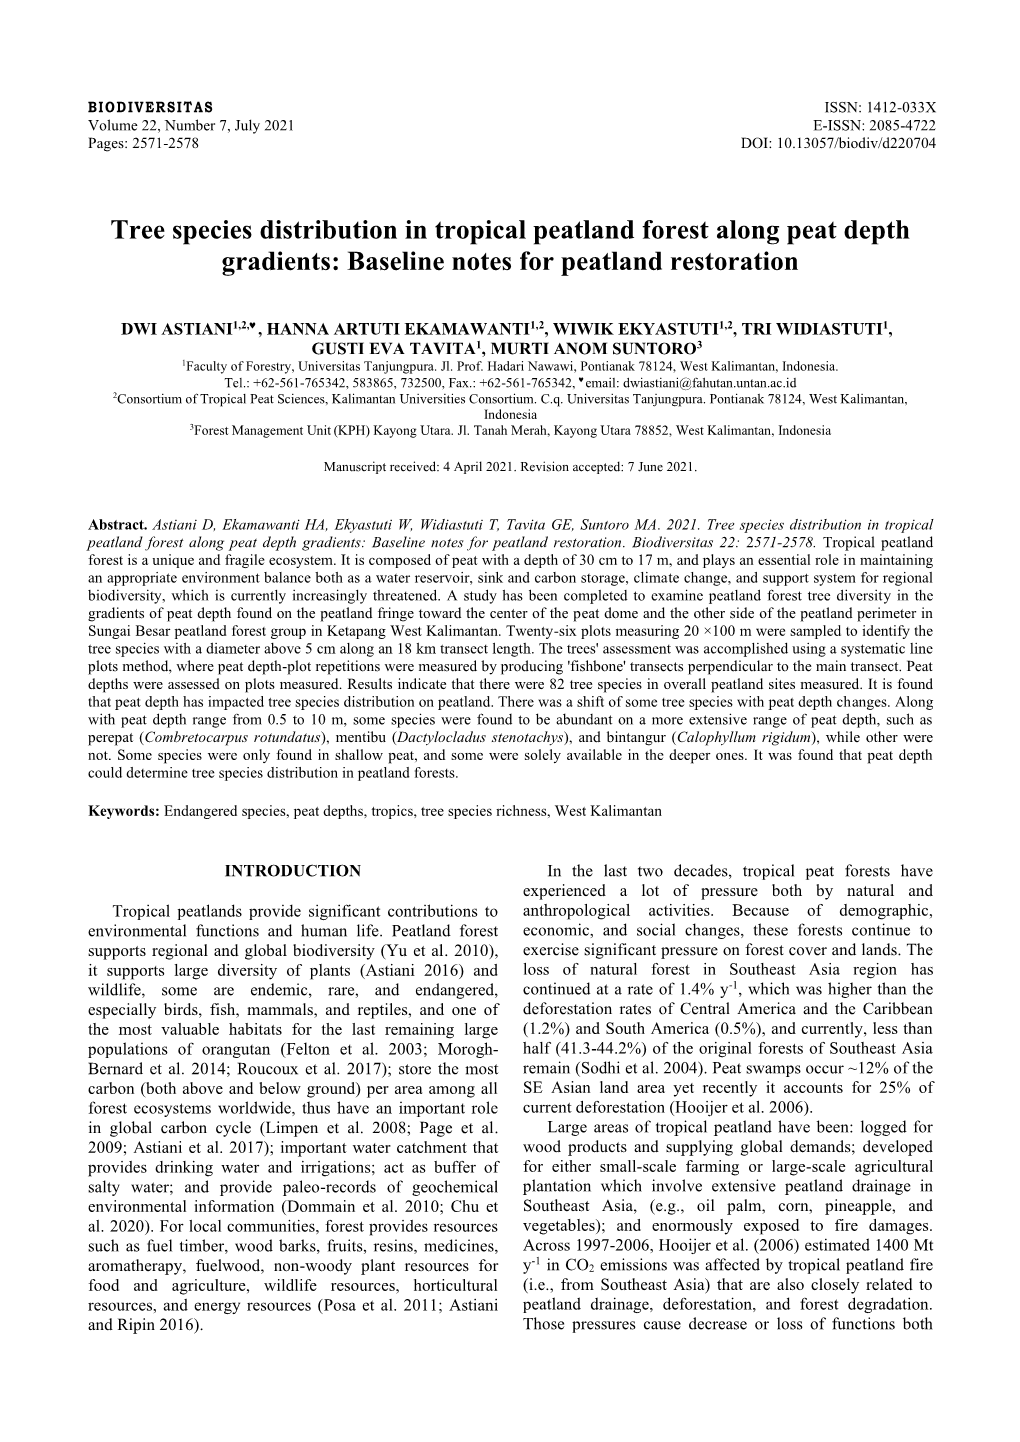 Tree Species Distribution in Tropical Peatland Forest Along Peat Depth Gradients: Baseline Notes for Peatland Restoration